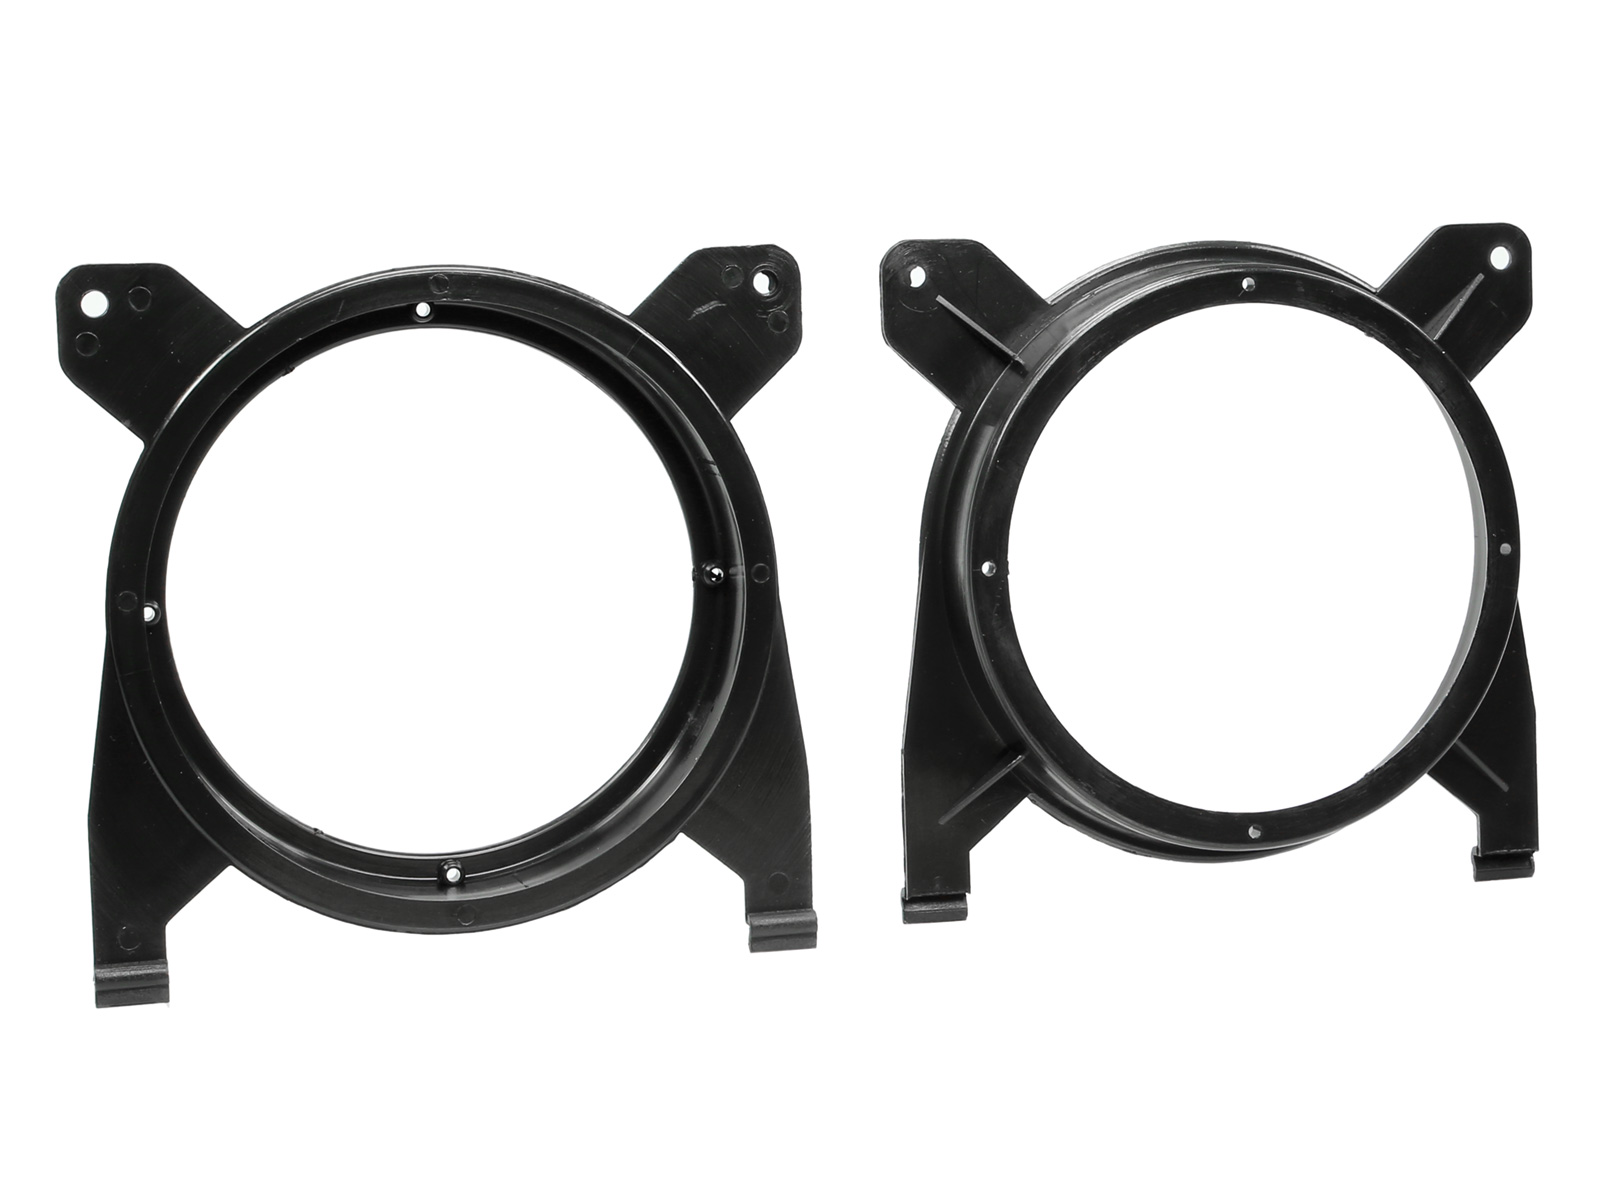 ACV Lautsprecher Adapterringe kompatibel mit Volvo S60 S70 S80 Heckablage adaptiert auf 165er Lautsprecher